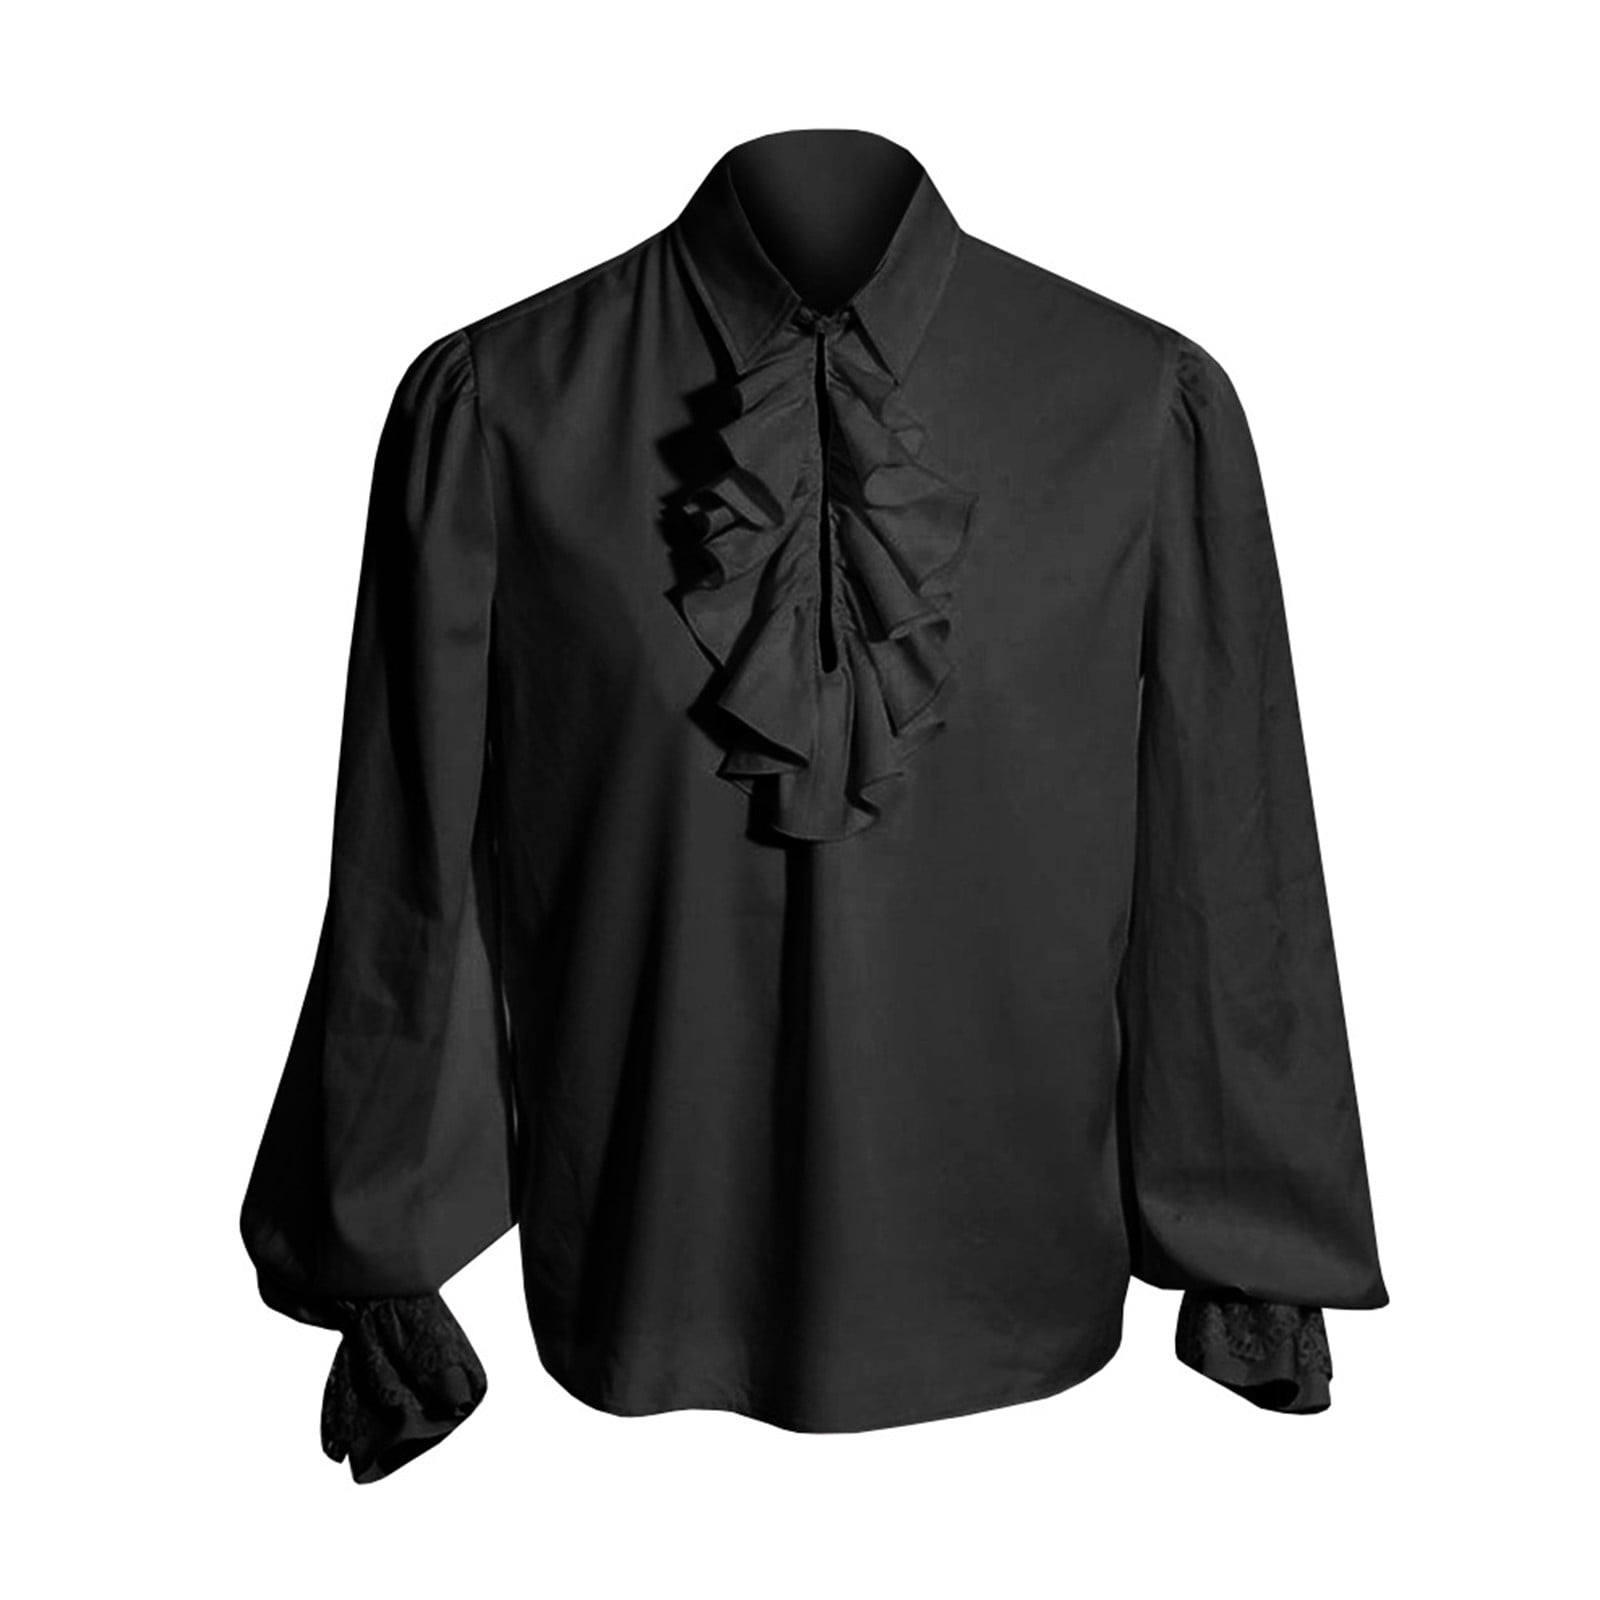 Lilgiuy Mens Shirt Steampunk Gothic Vintage Ruffled Halloween Costume ...